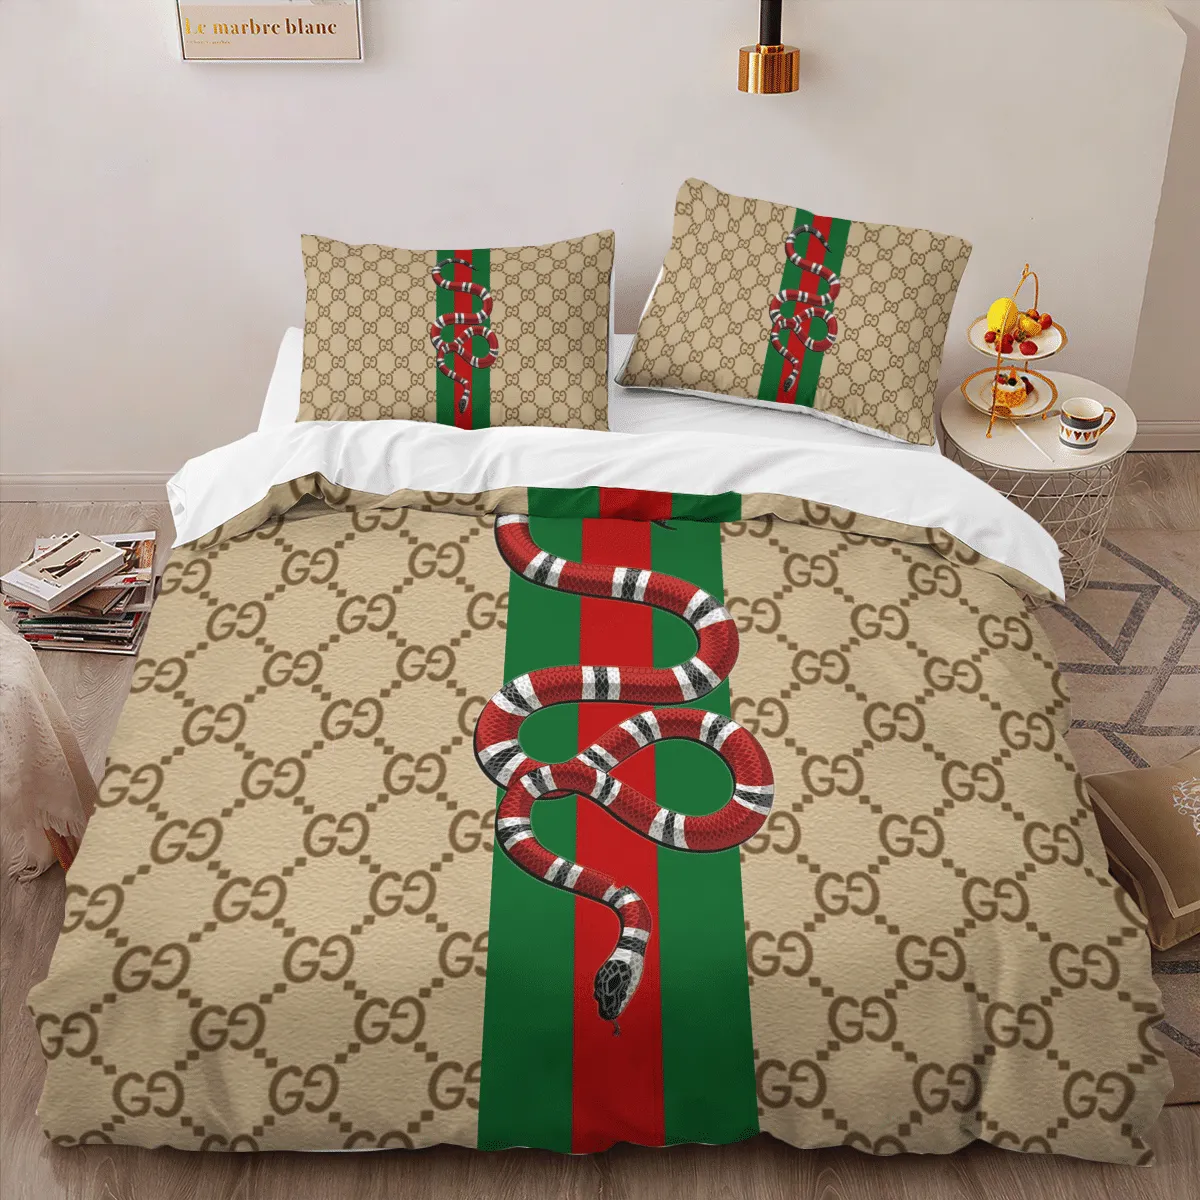 Gucci Brown Snake Logo Brand Bedding Set Bedroom Home Decor Luxury Bedspread